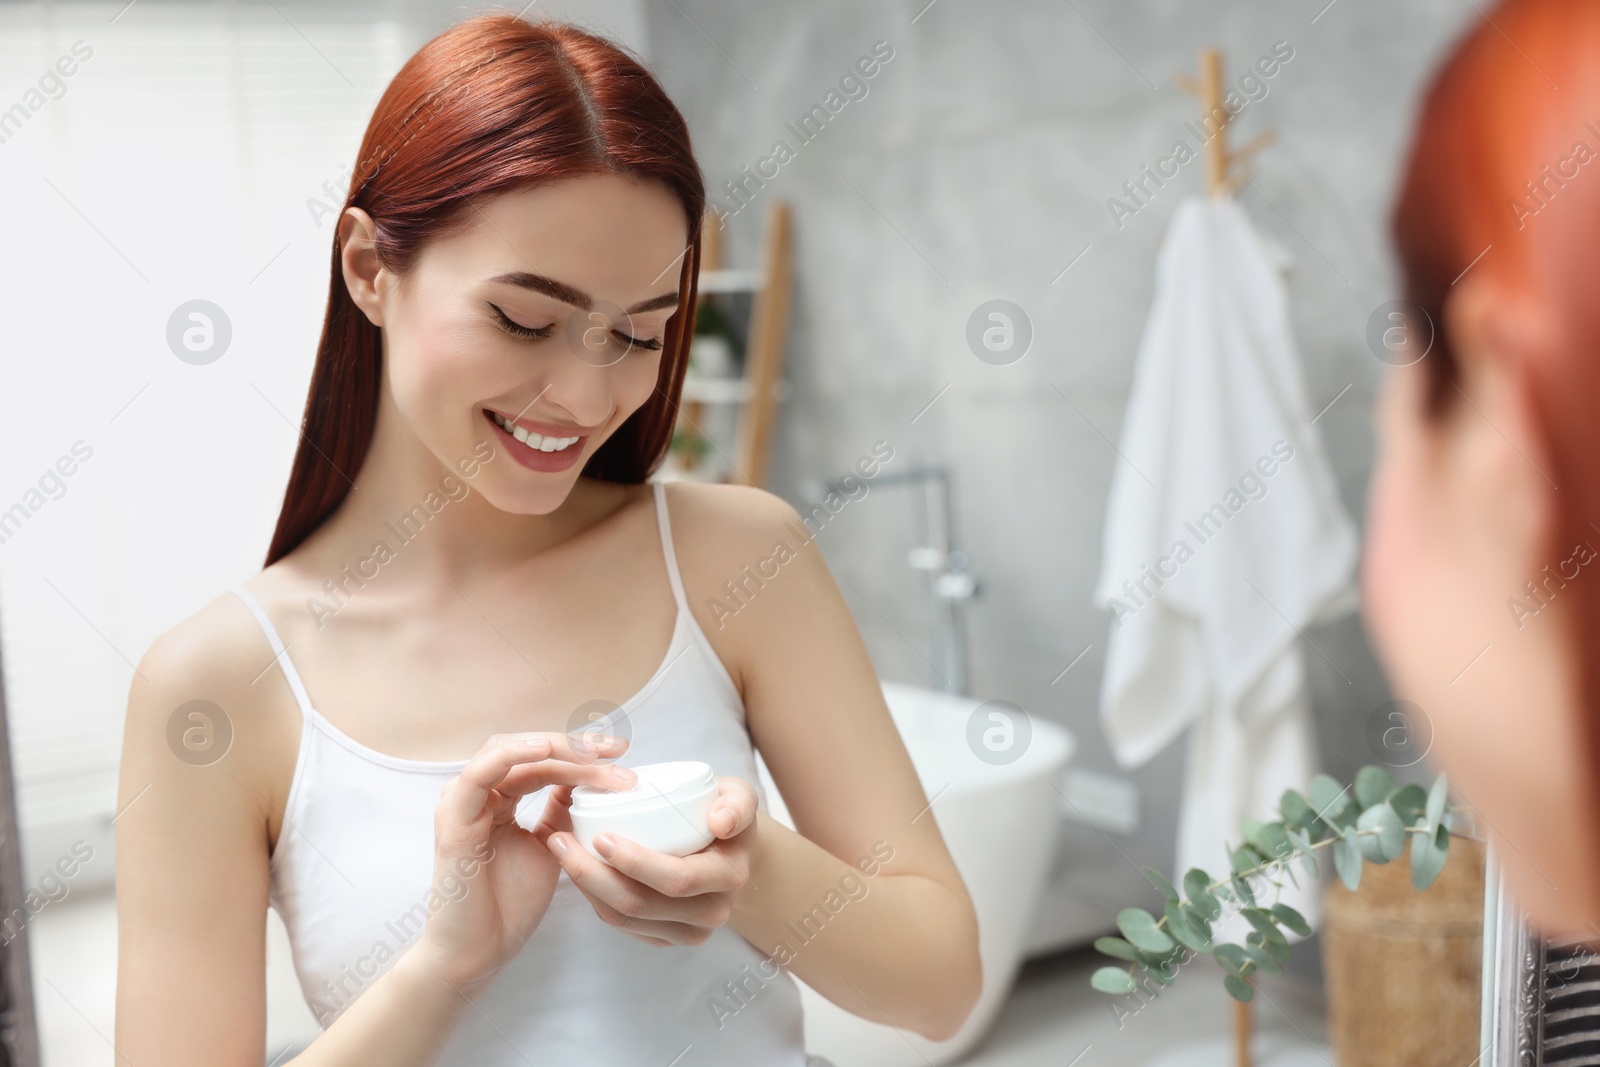 Photo of Beautiful young woman holding jar of body cream near mirror in bathroom